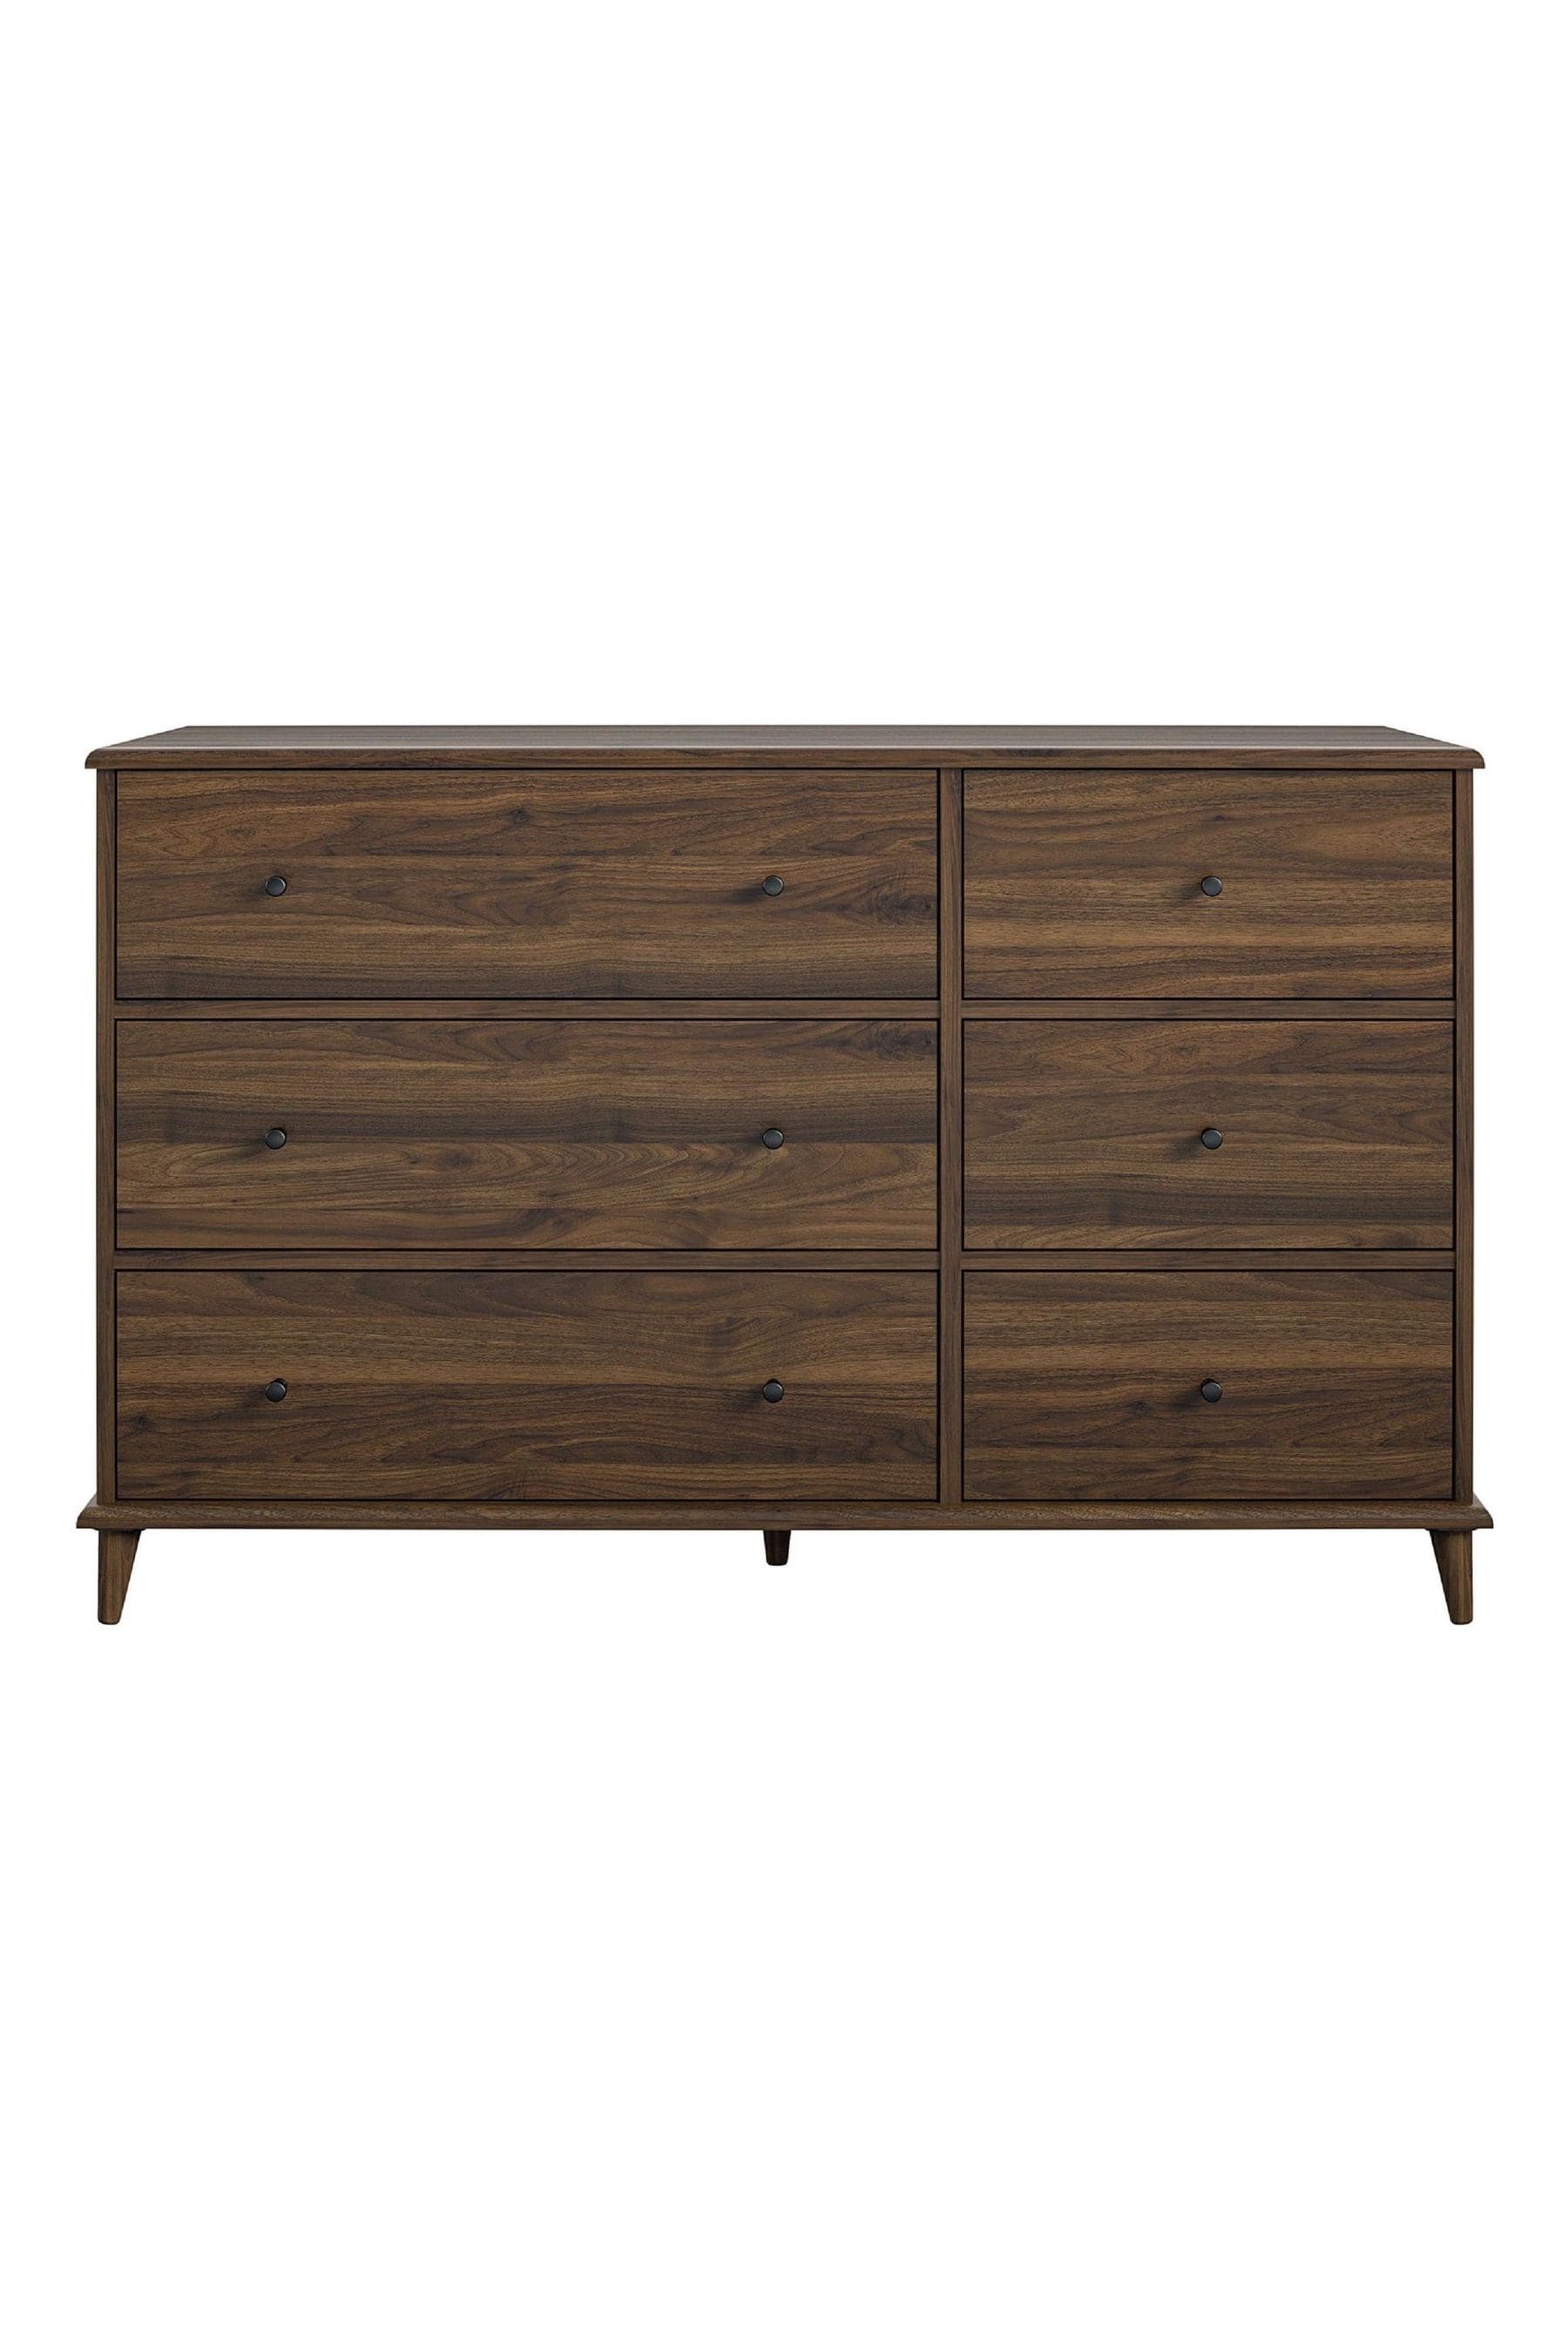 Buy Dorel Home Walnut Brown Europe Farnsworth 6 Drawer Dresser from the ...